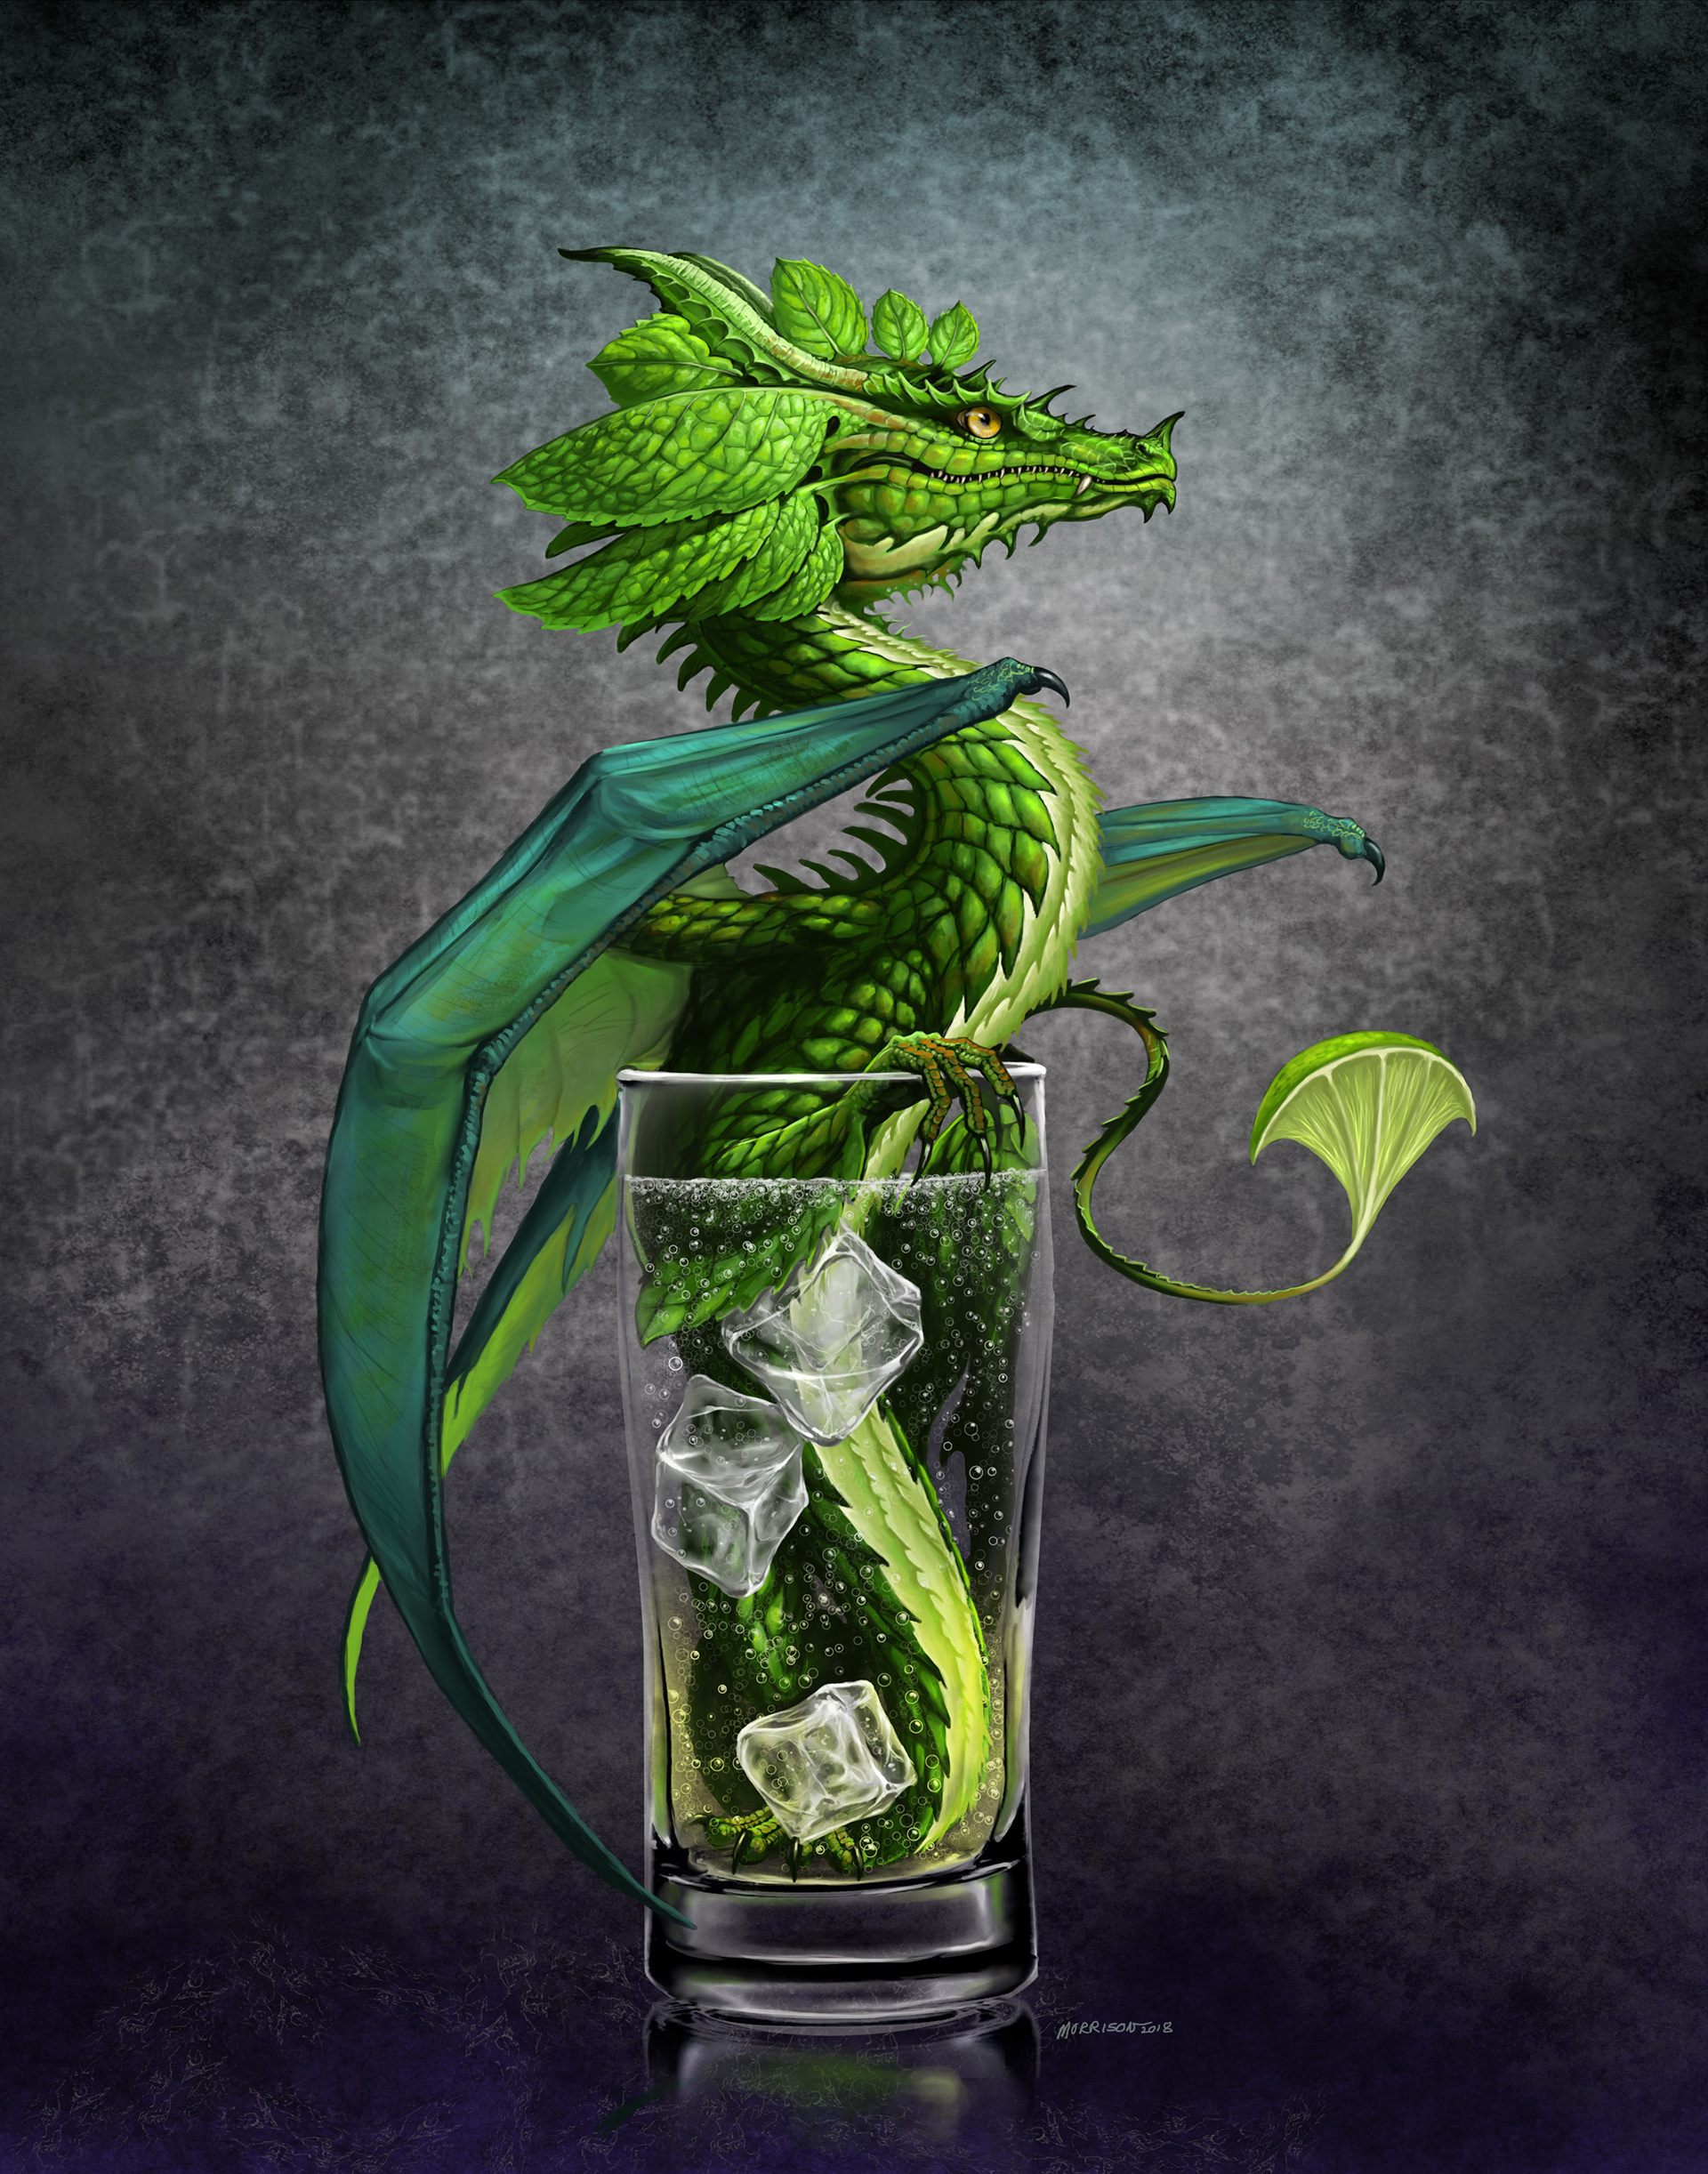 Rum Dragon, by Stanley Morrison